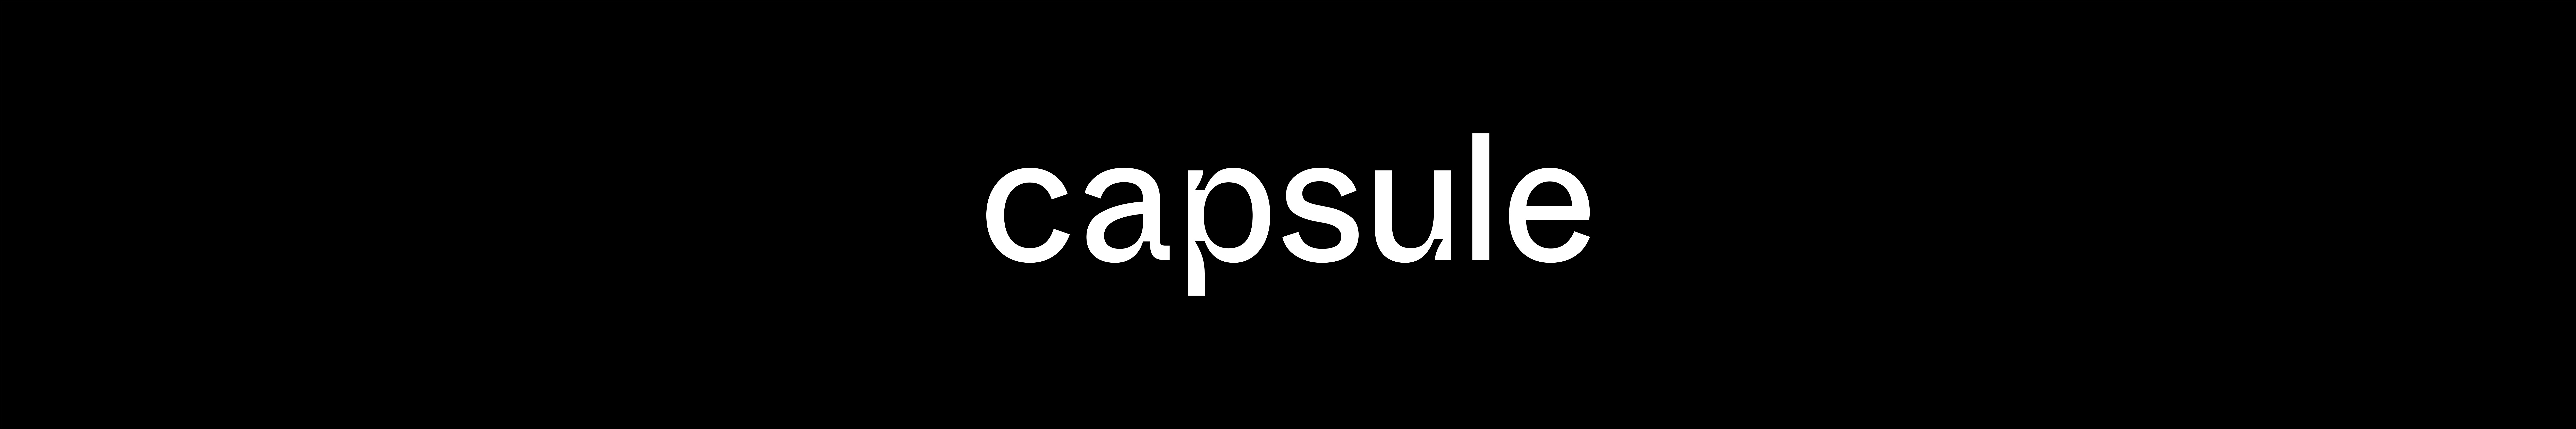 Capsule-banner